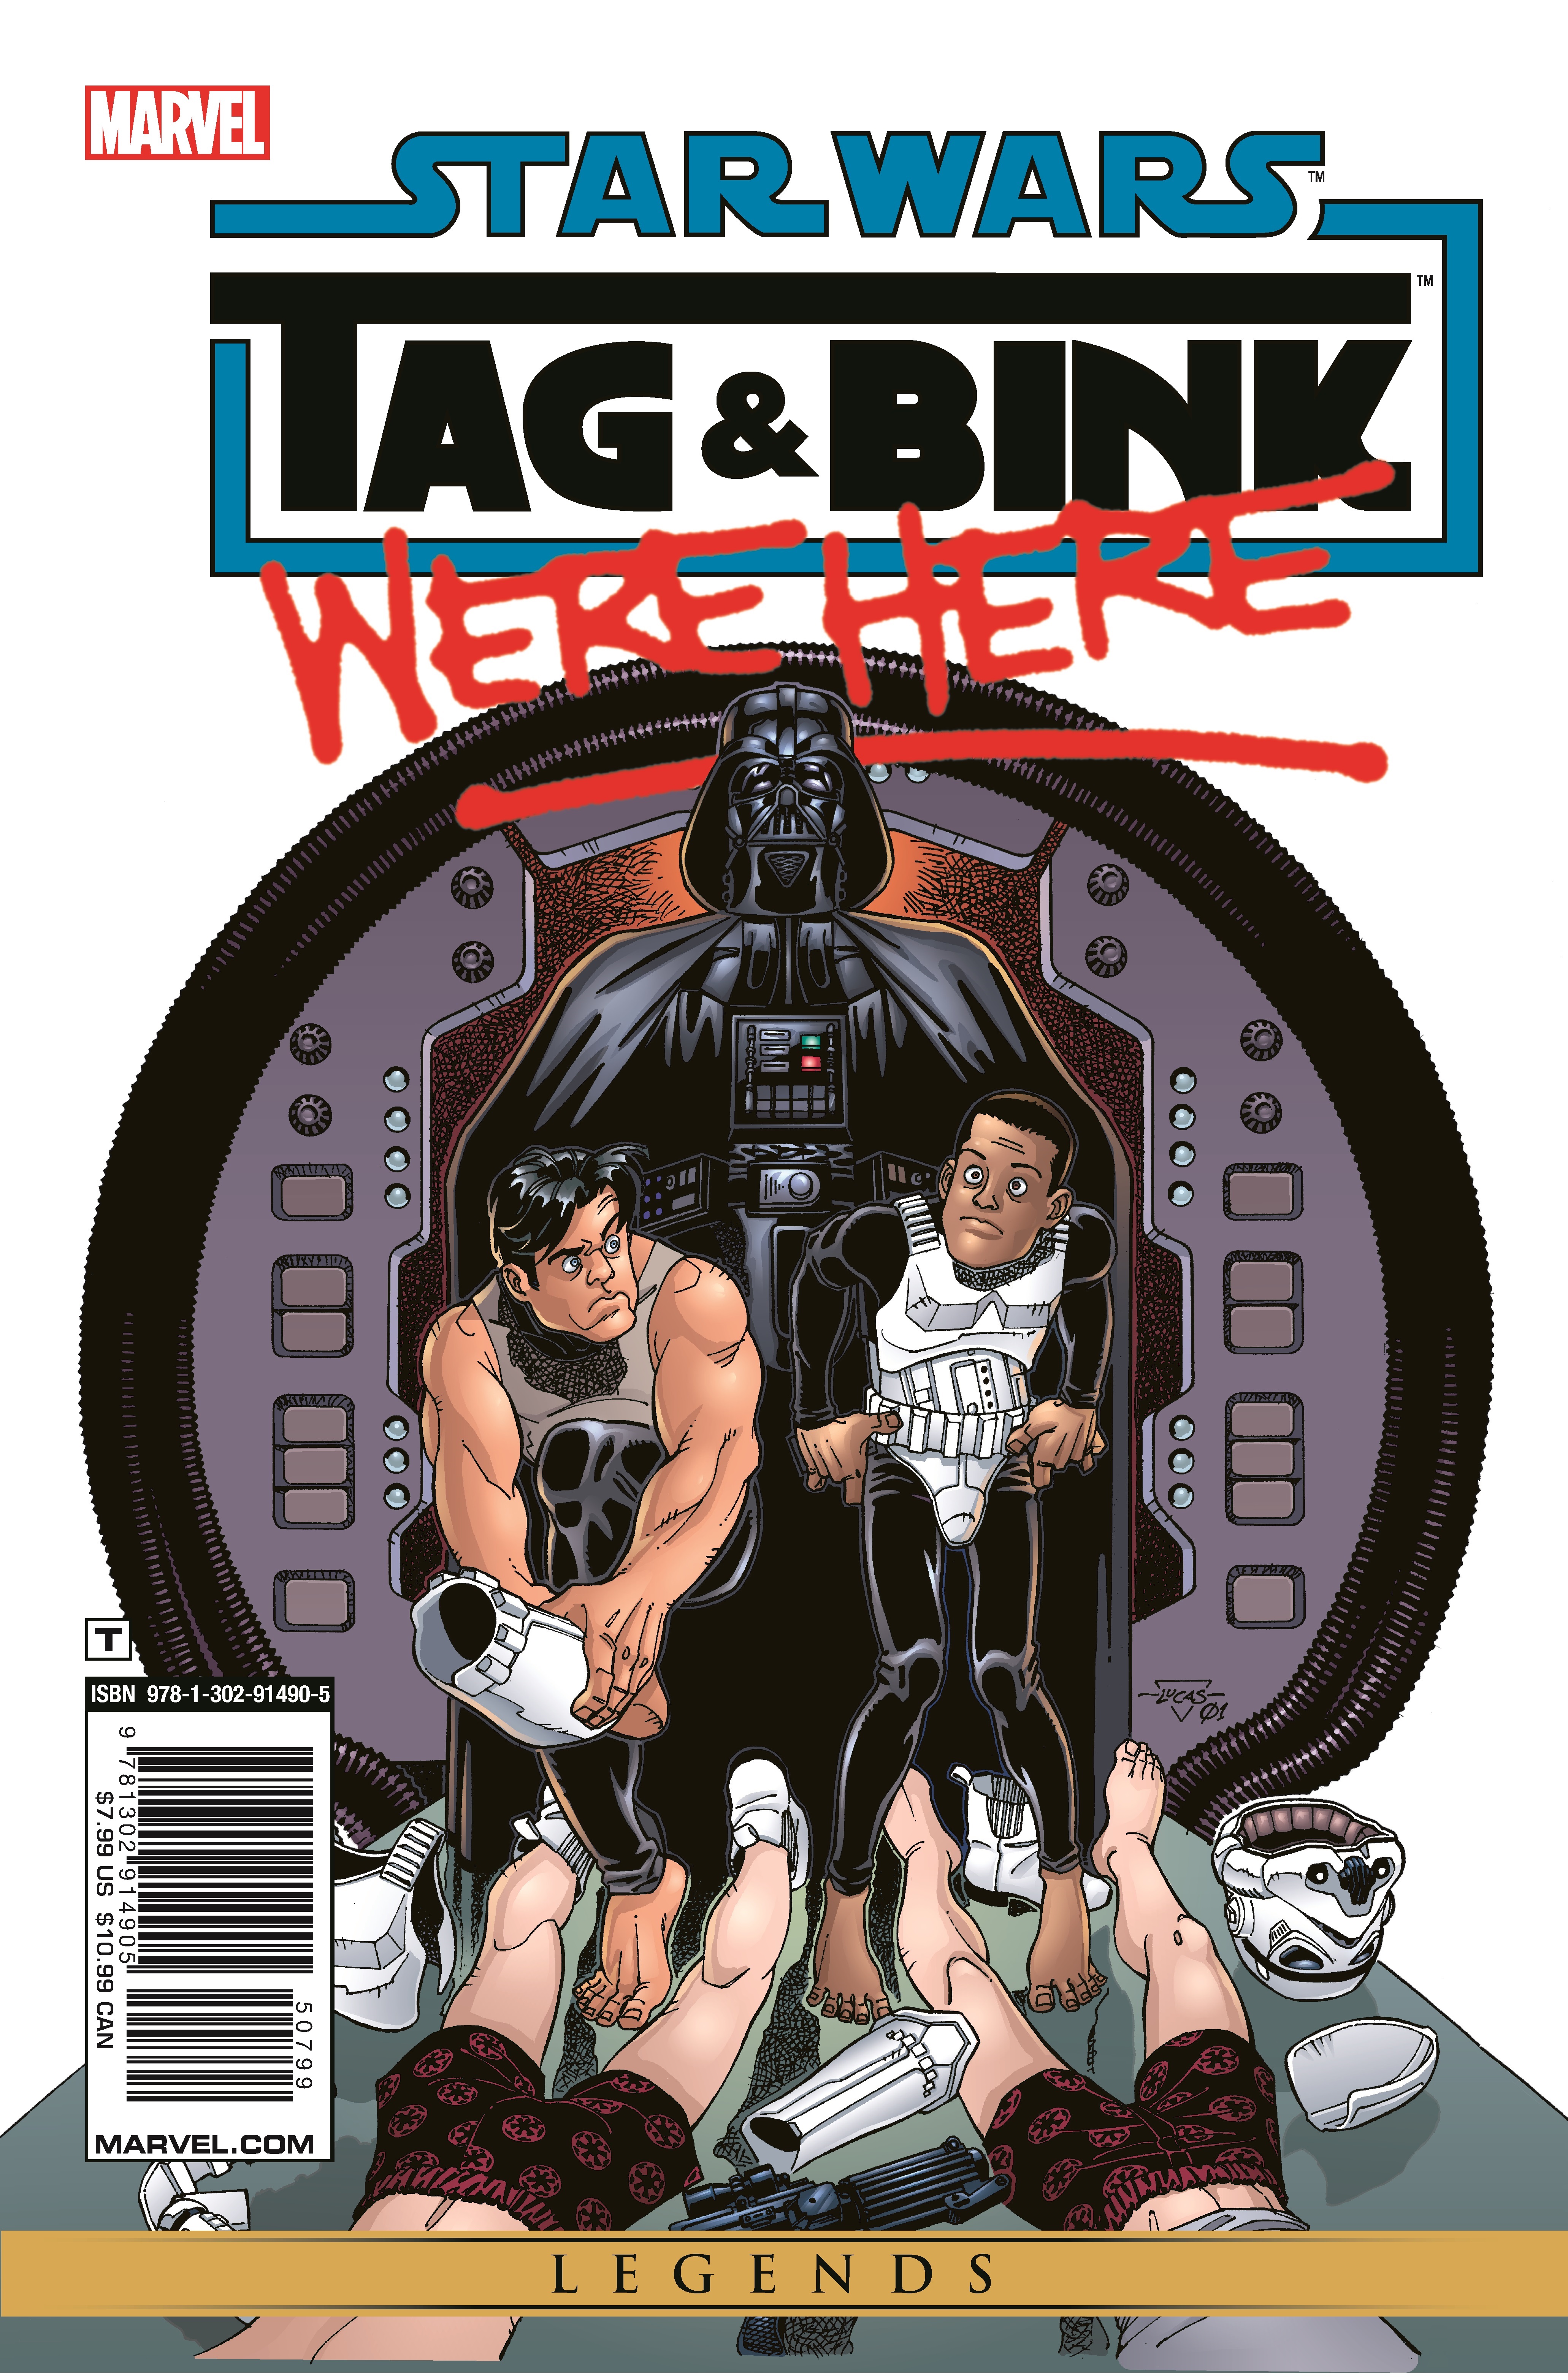 Star wars tag and bink